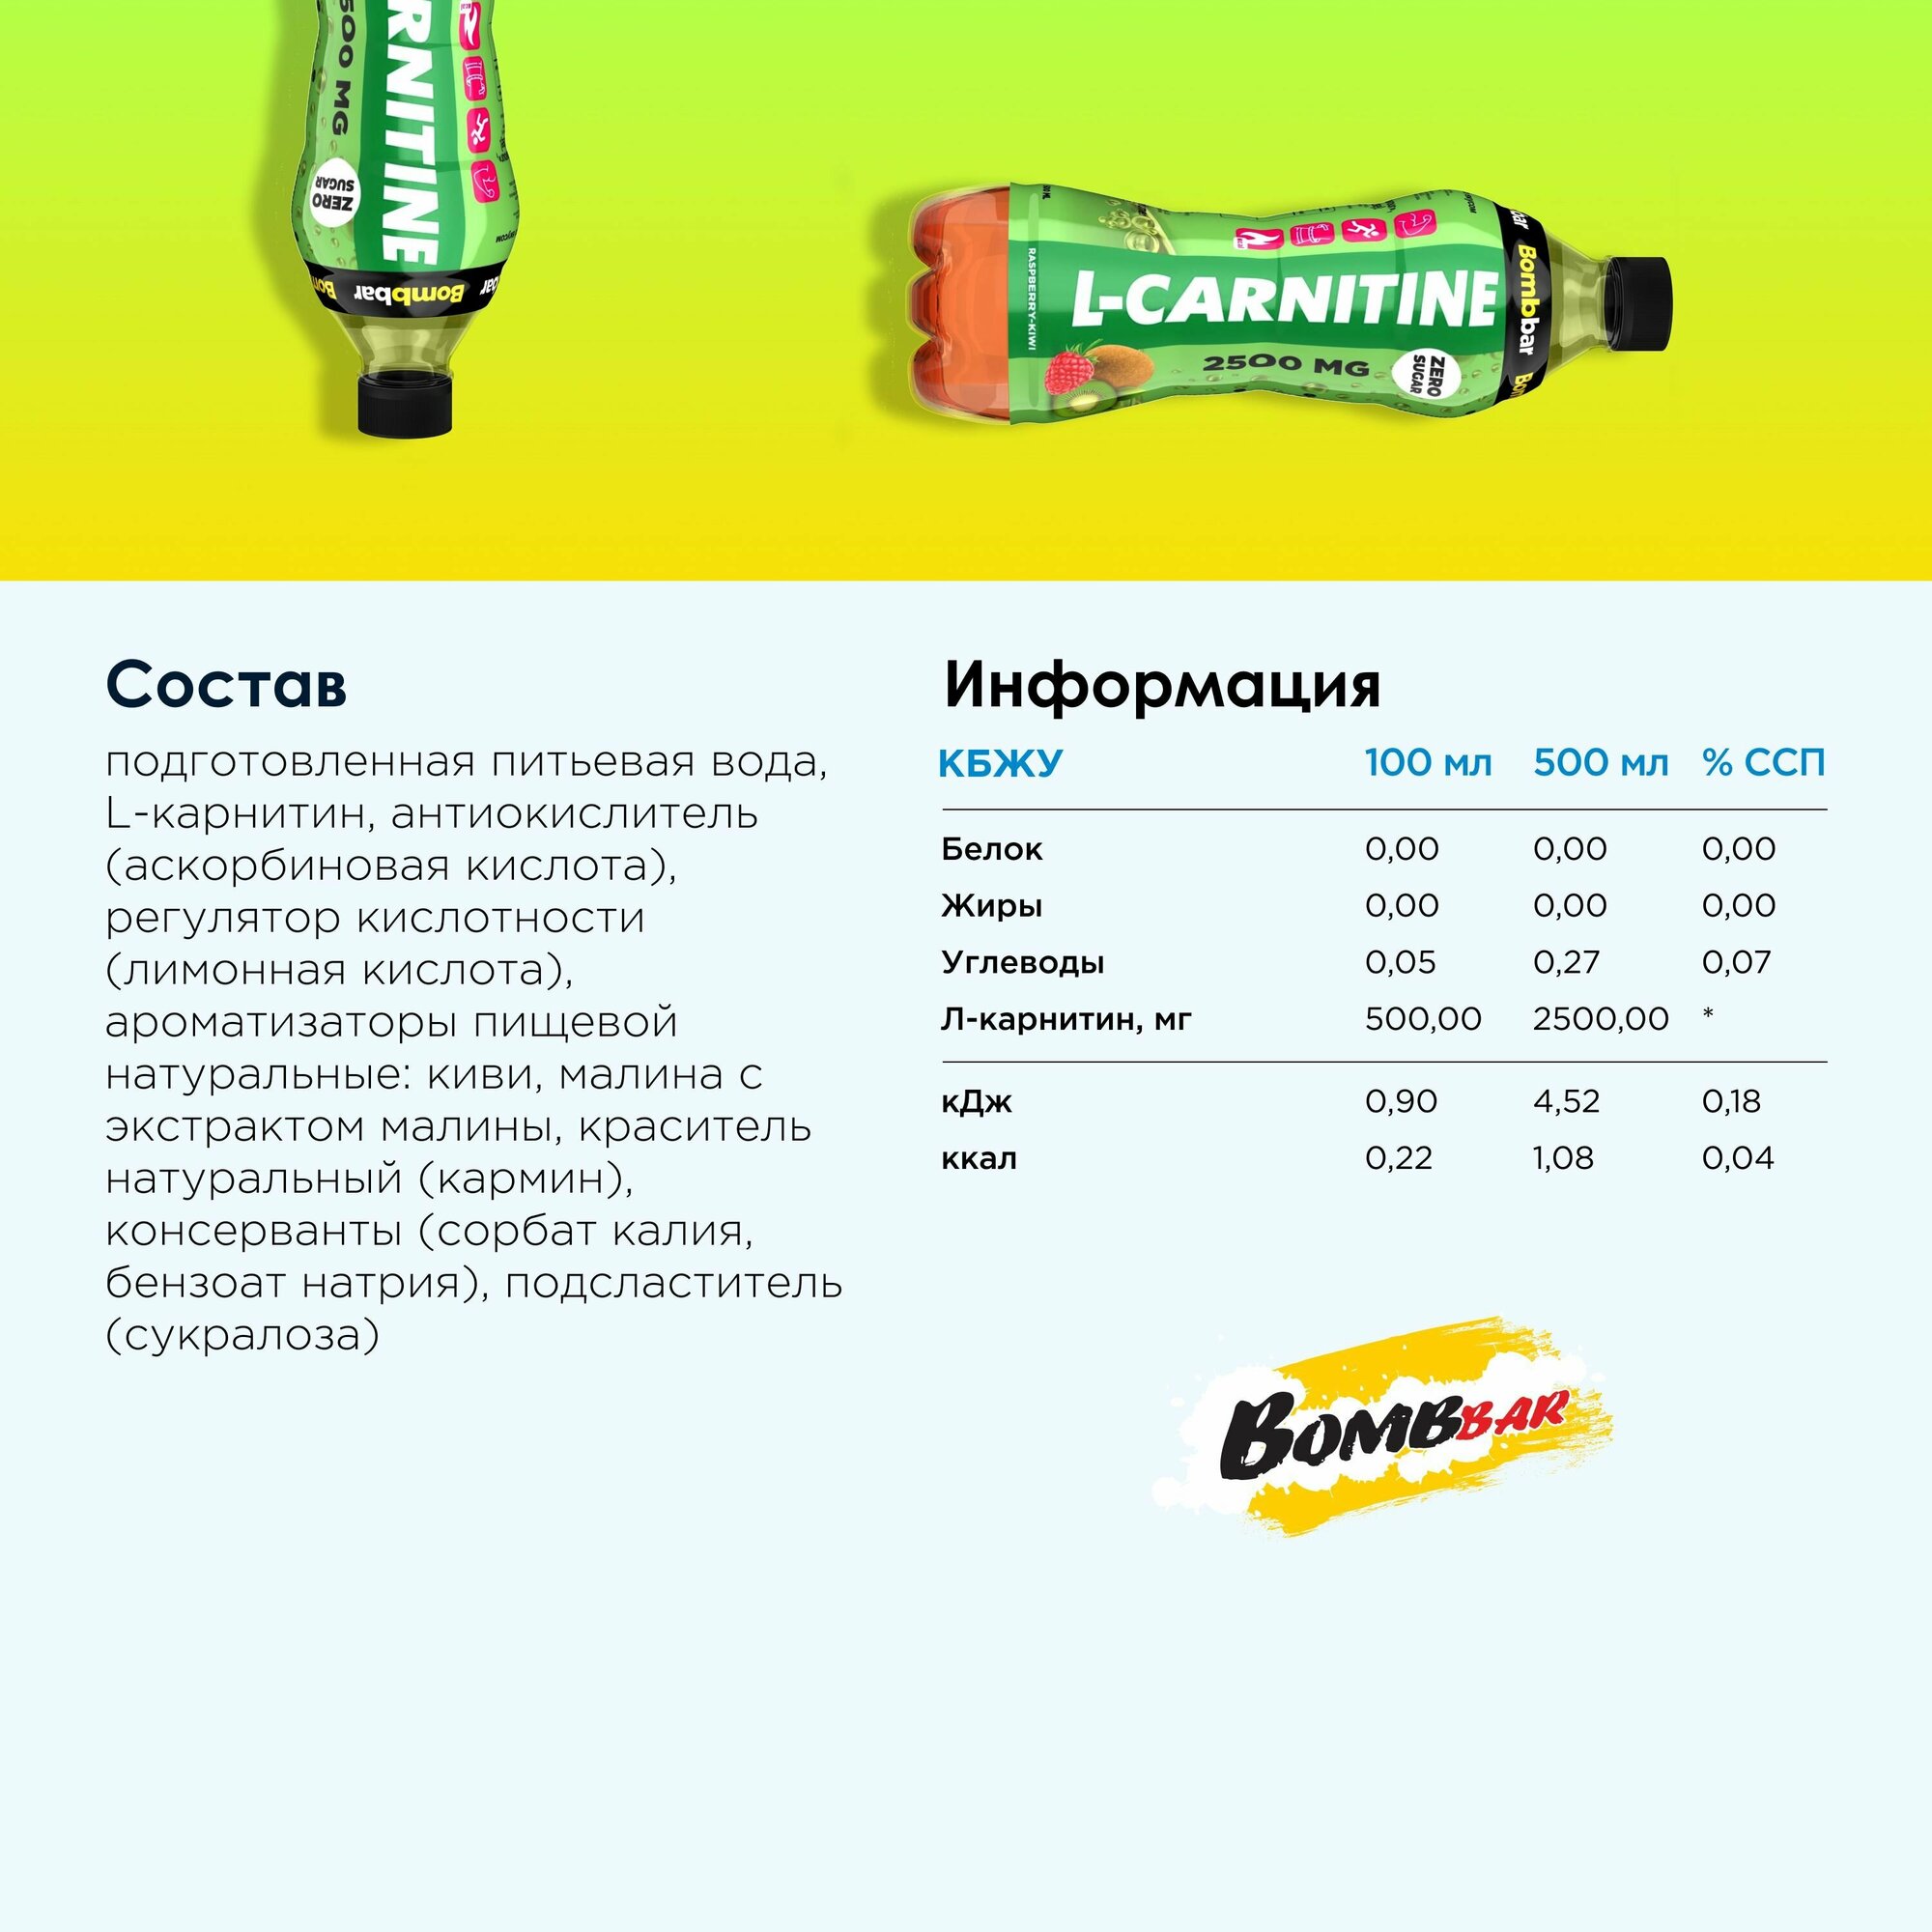 Bombbar Напиток L-карнитин без сахара 2500 мг "Ассорти", 500 мл x 6 шт